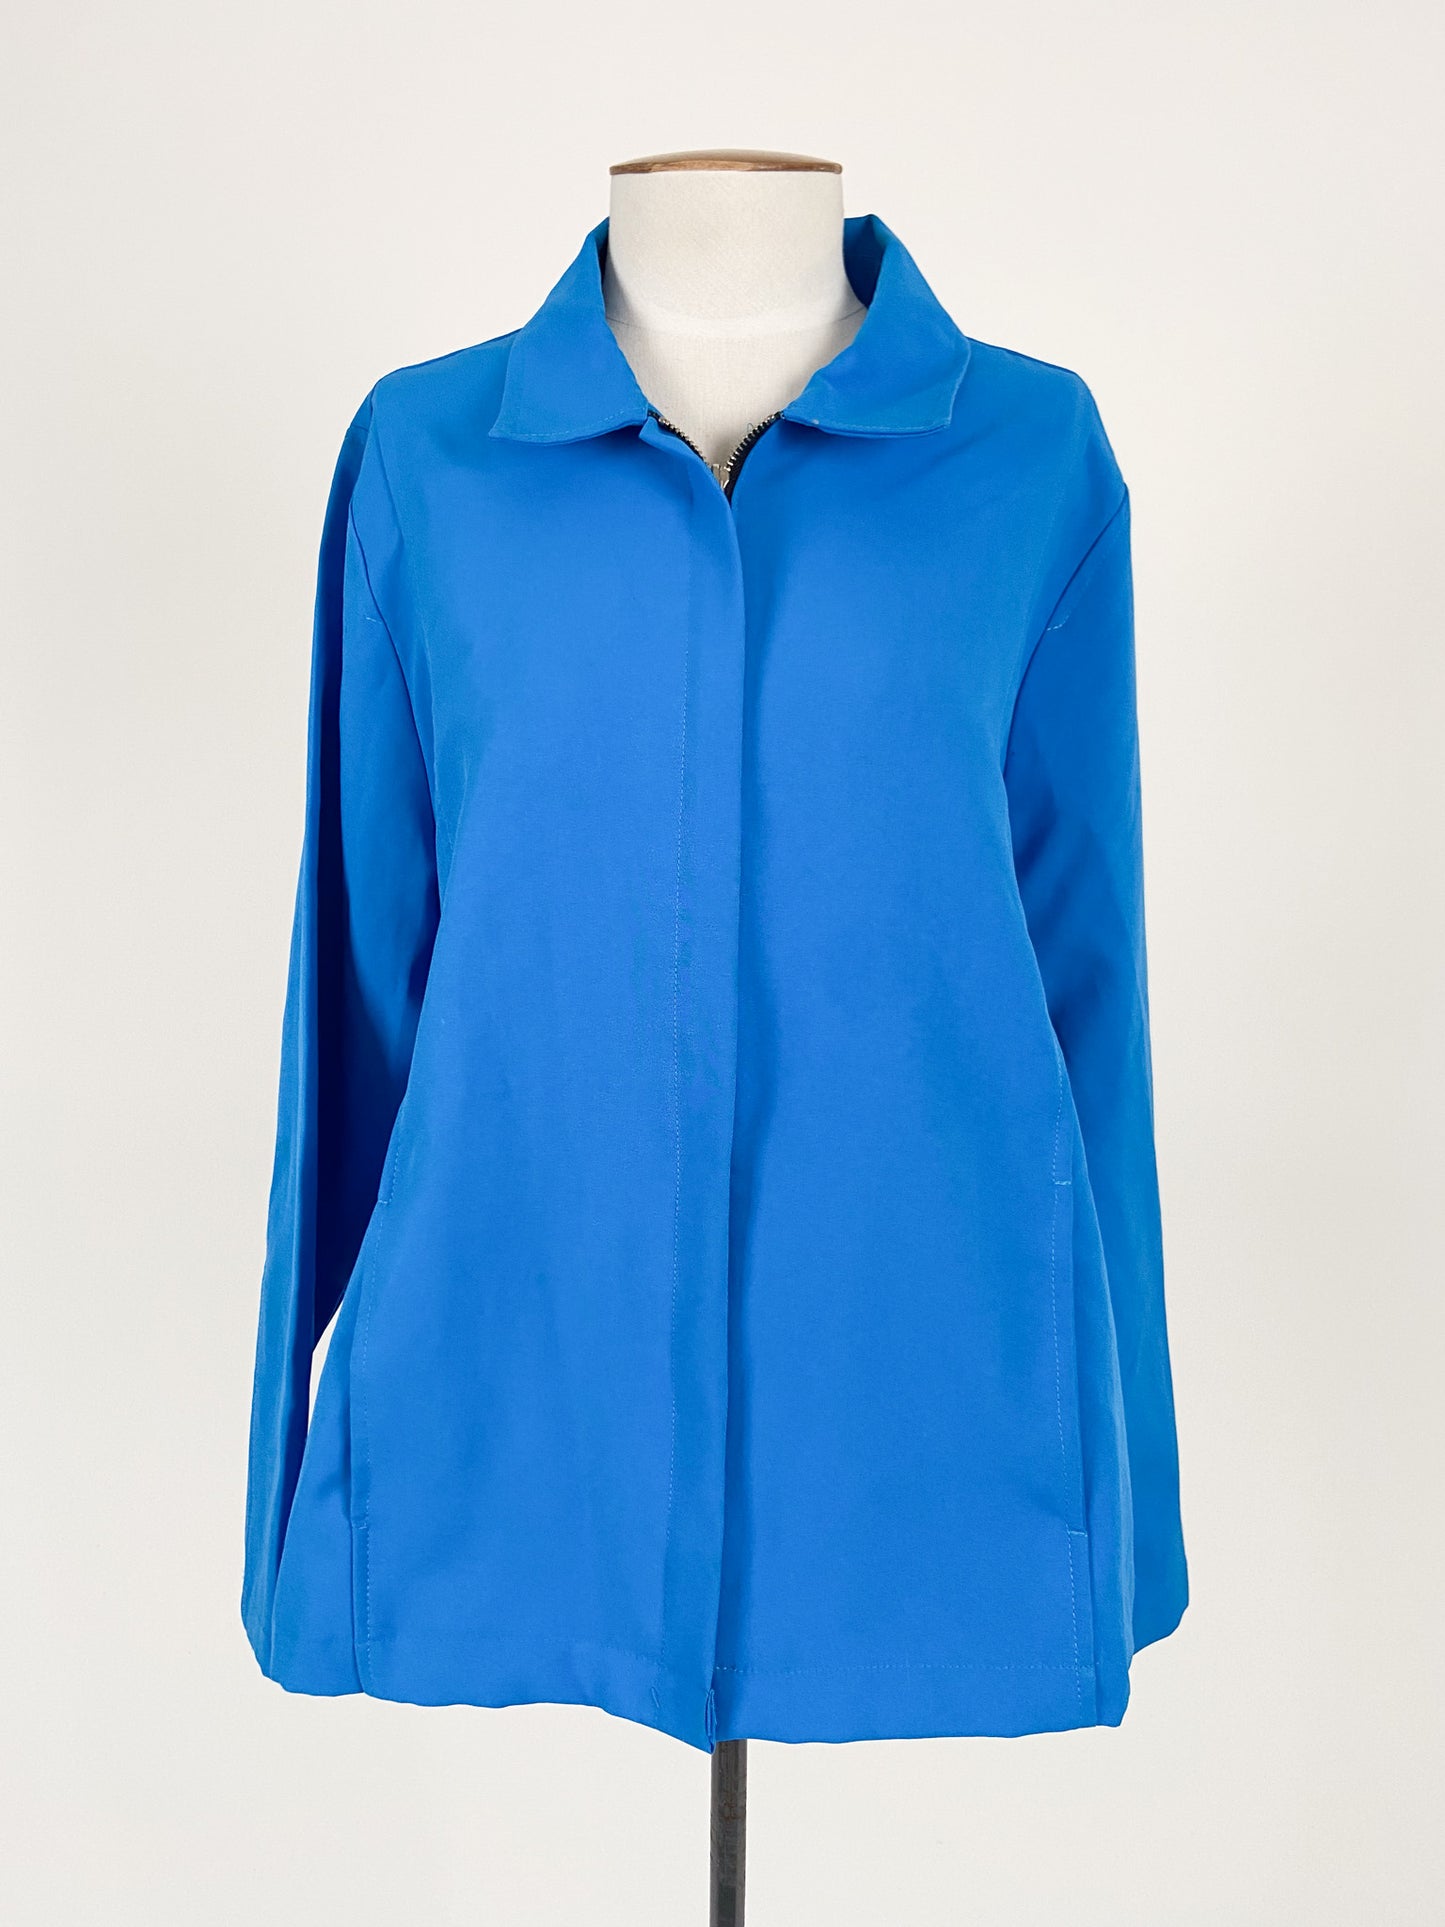 Mackenzie Ellen | Blue Workwear Top | Size M